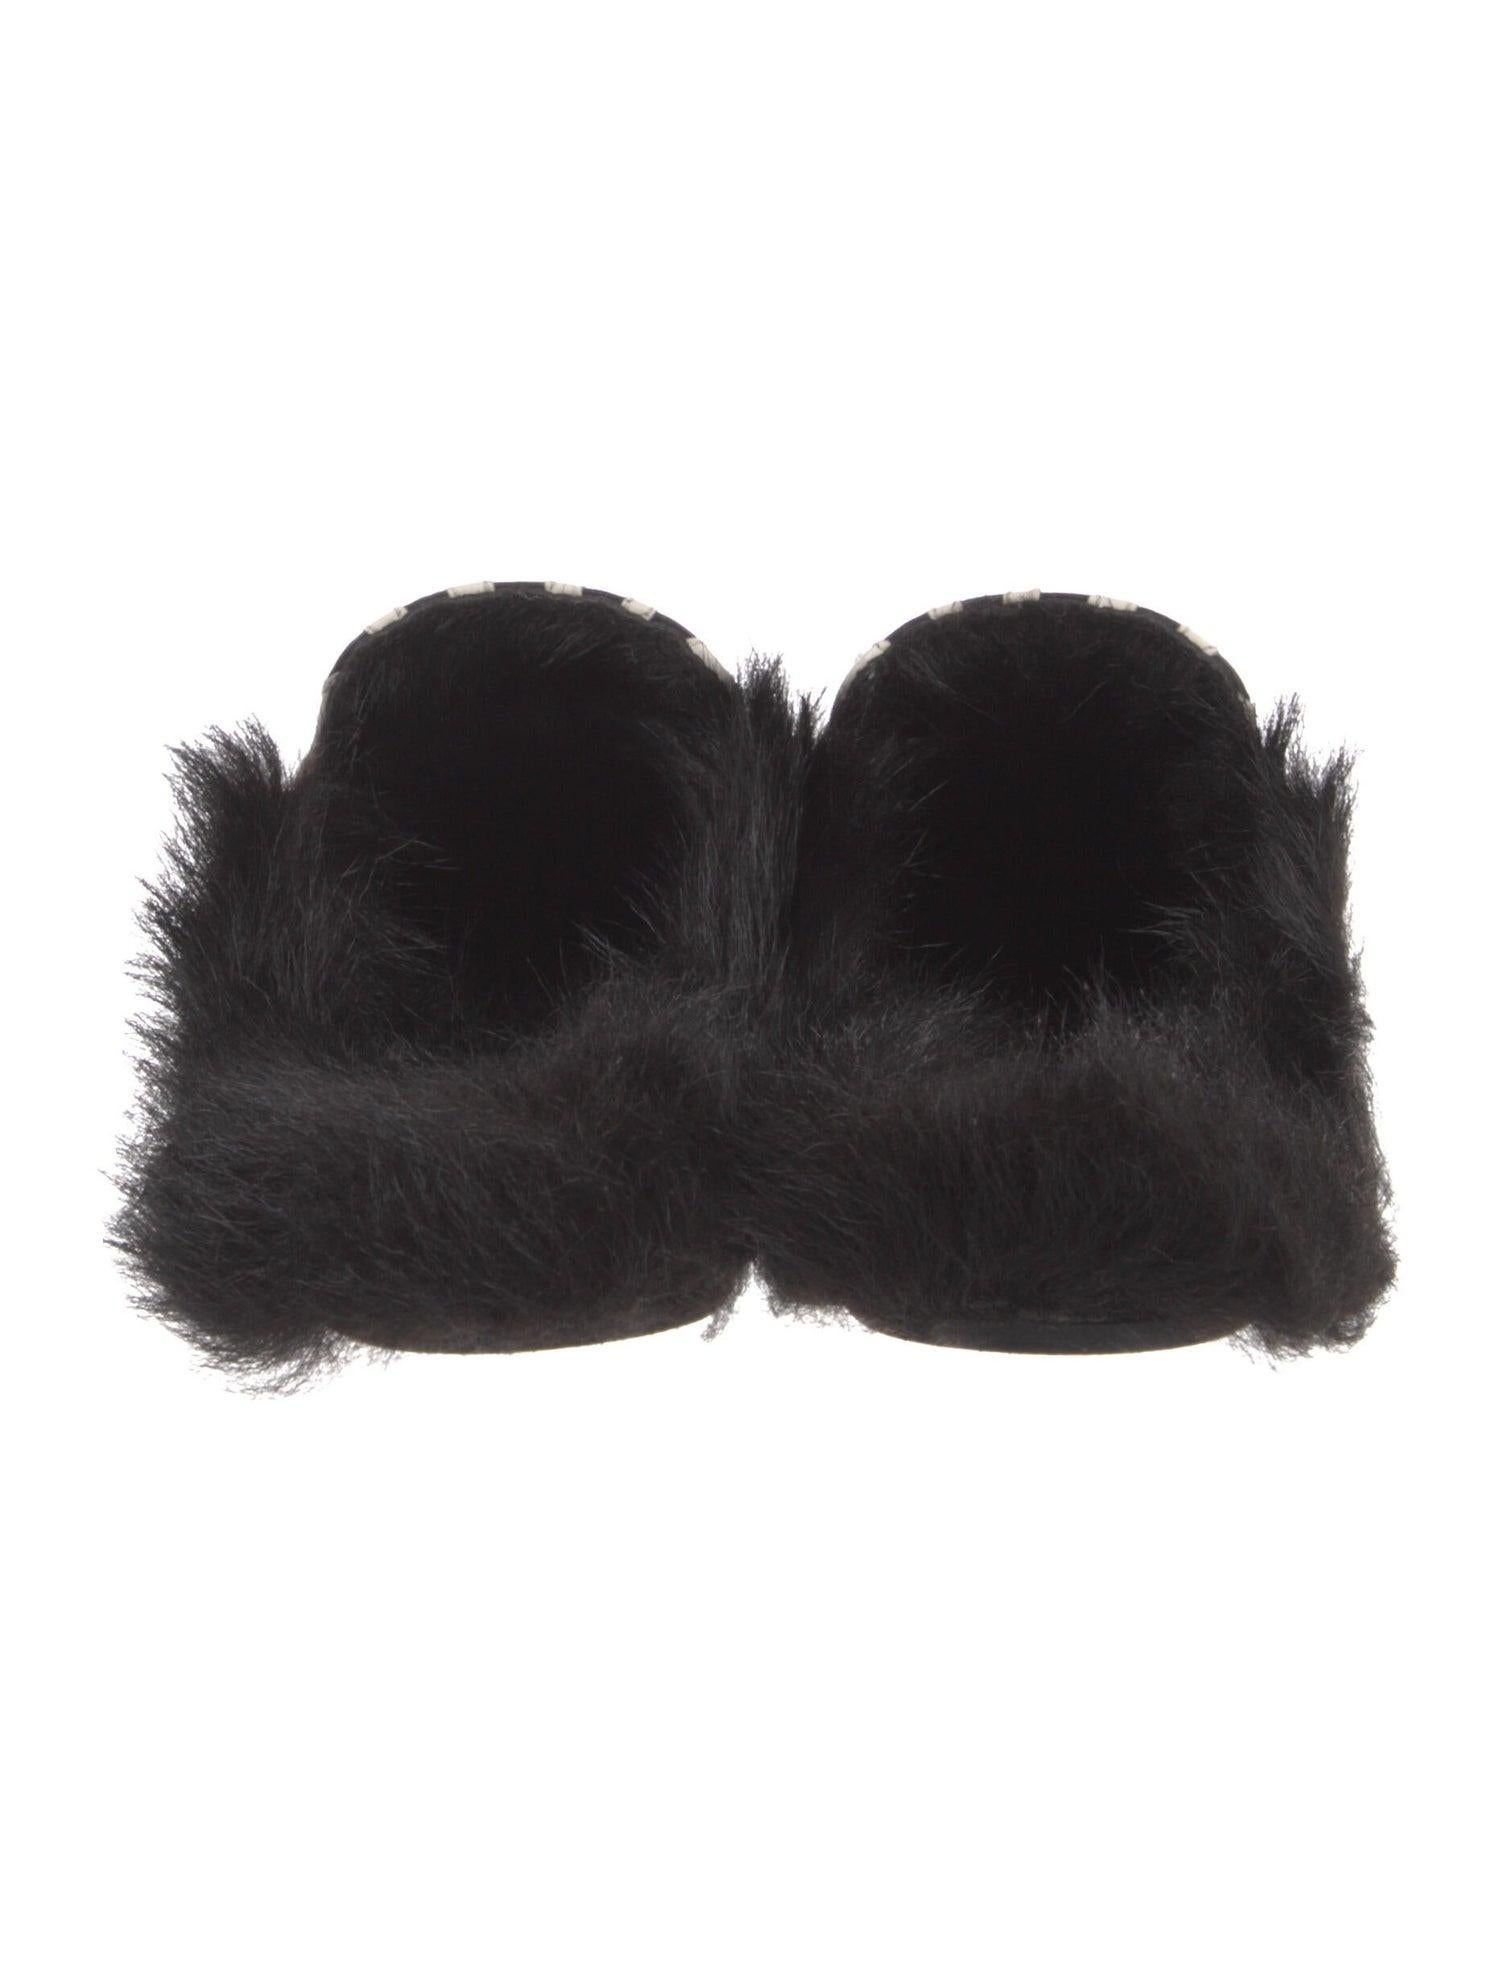 New Gucci Kendall Jenner Princetown  Zebra Faux Fur Loafers Slides Flats Sz 35.5 2